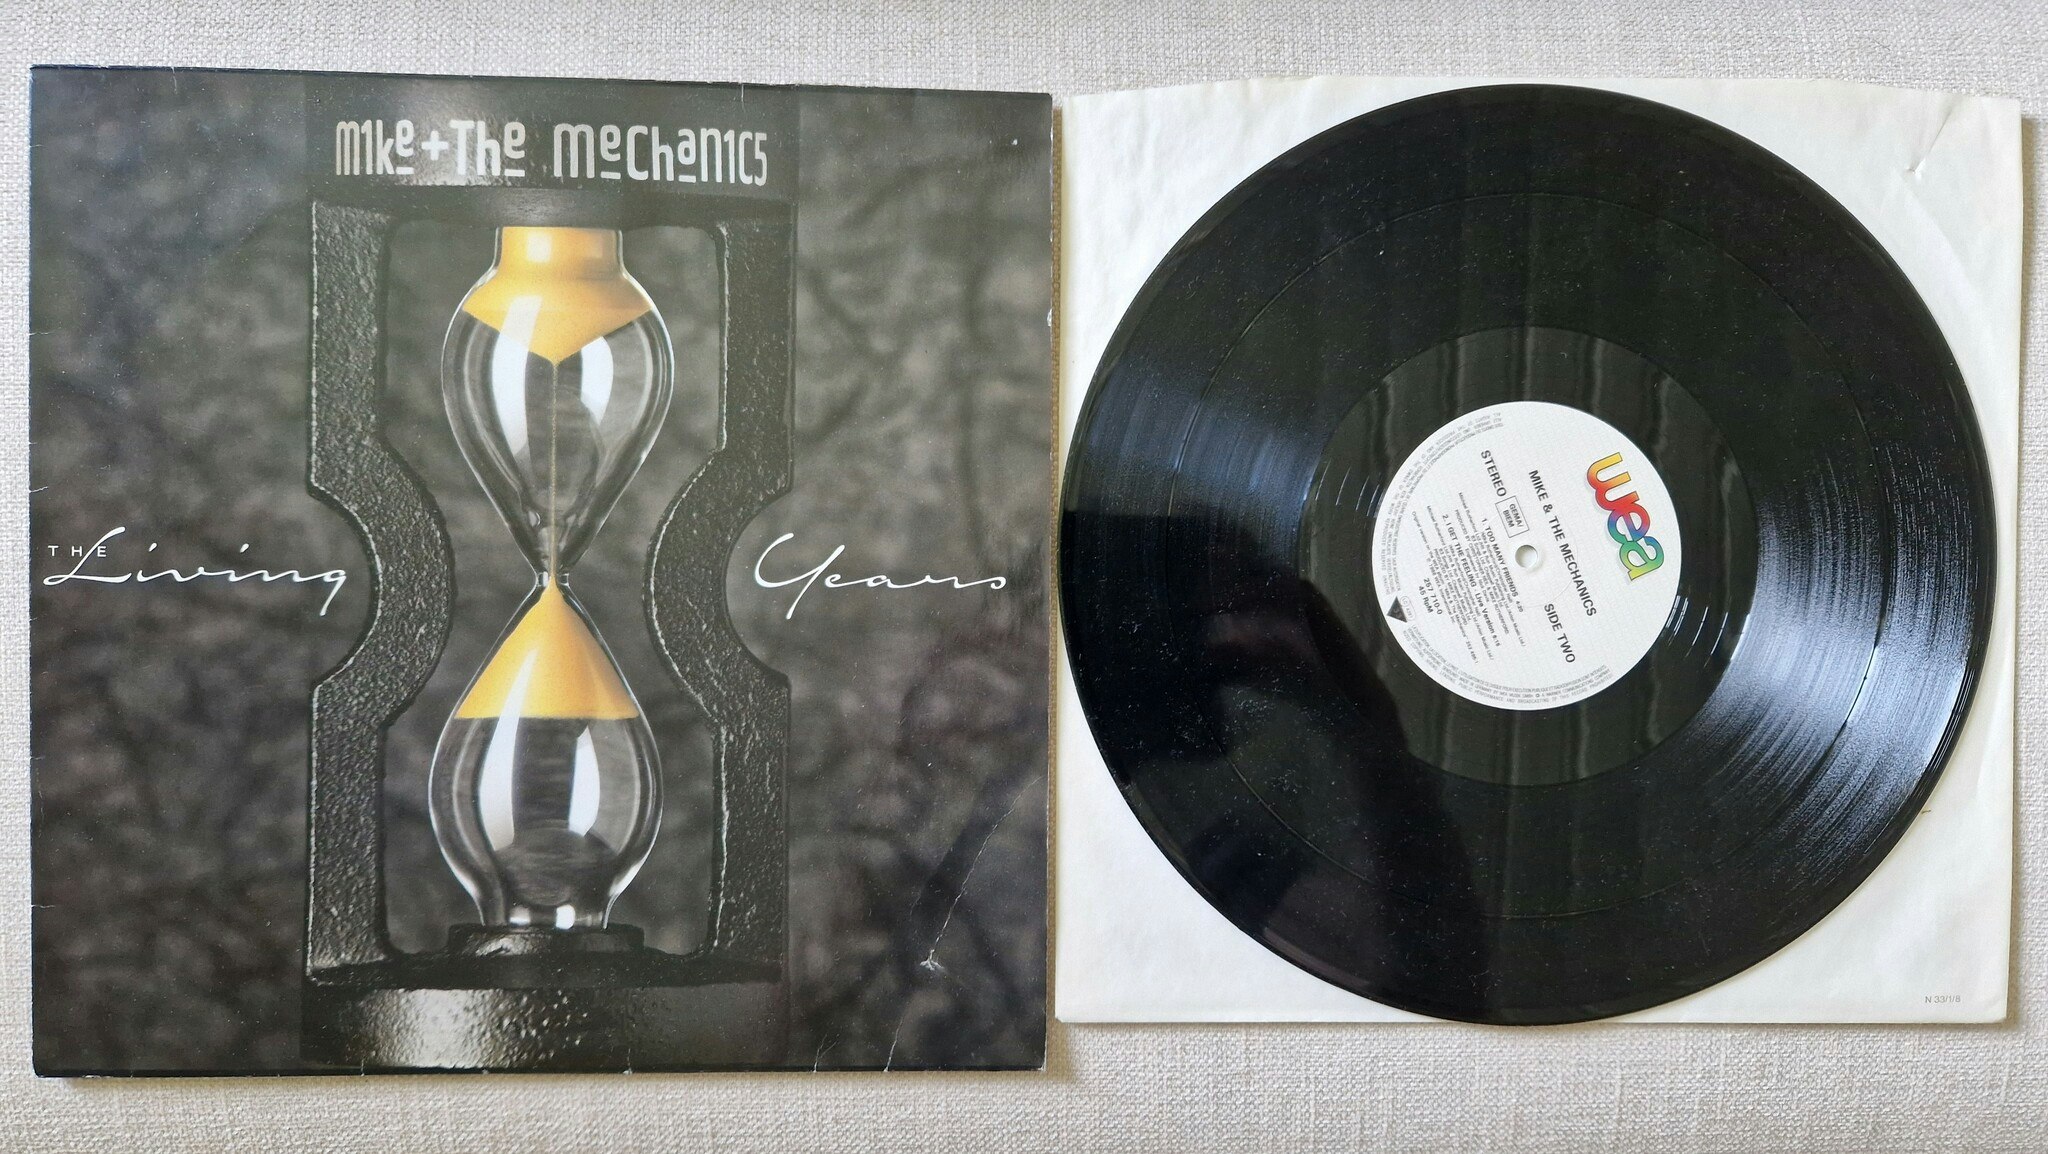 Mike & The Mechanics, The living years. Vinyl S 12"